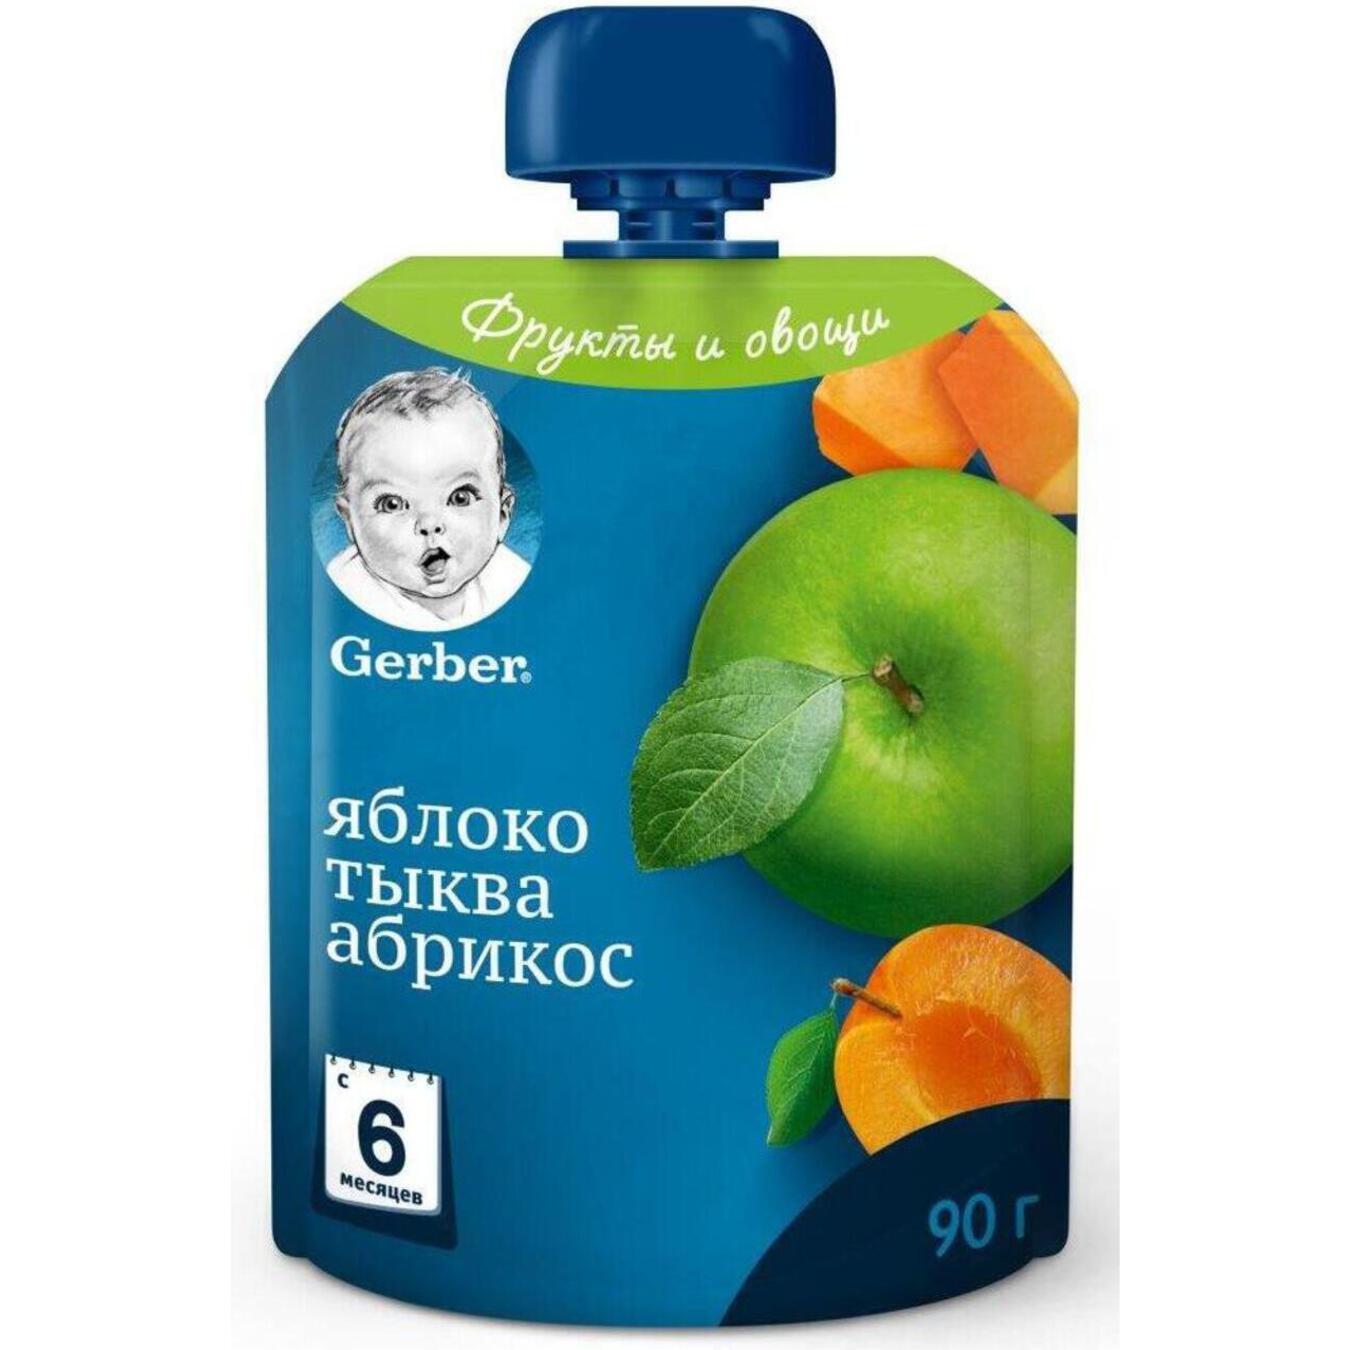 Gerber pumpkin-apricot for children from 6 month puree 90g